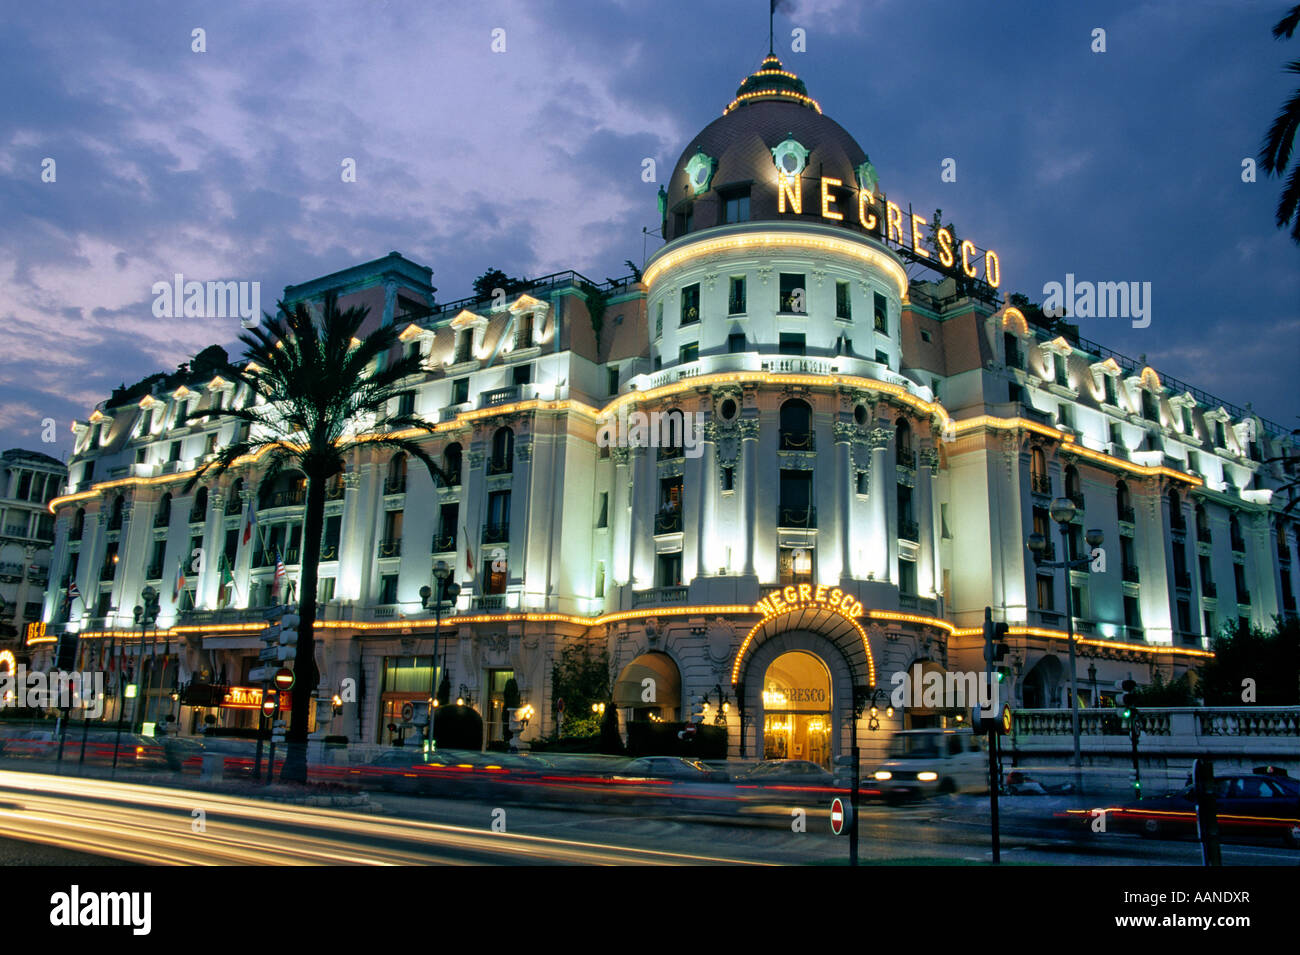 Hotel Negresco, Nice, Europe Banque D'Images